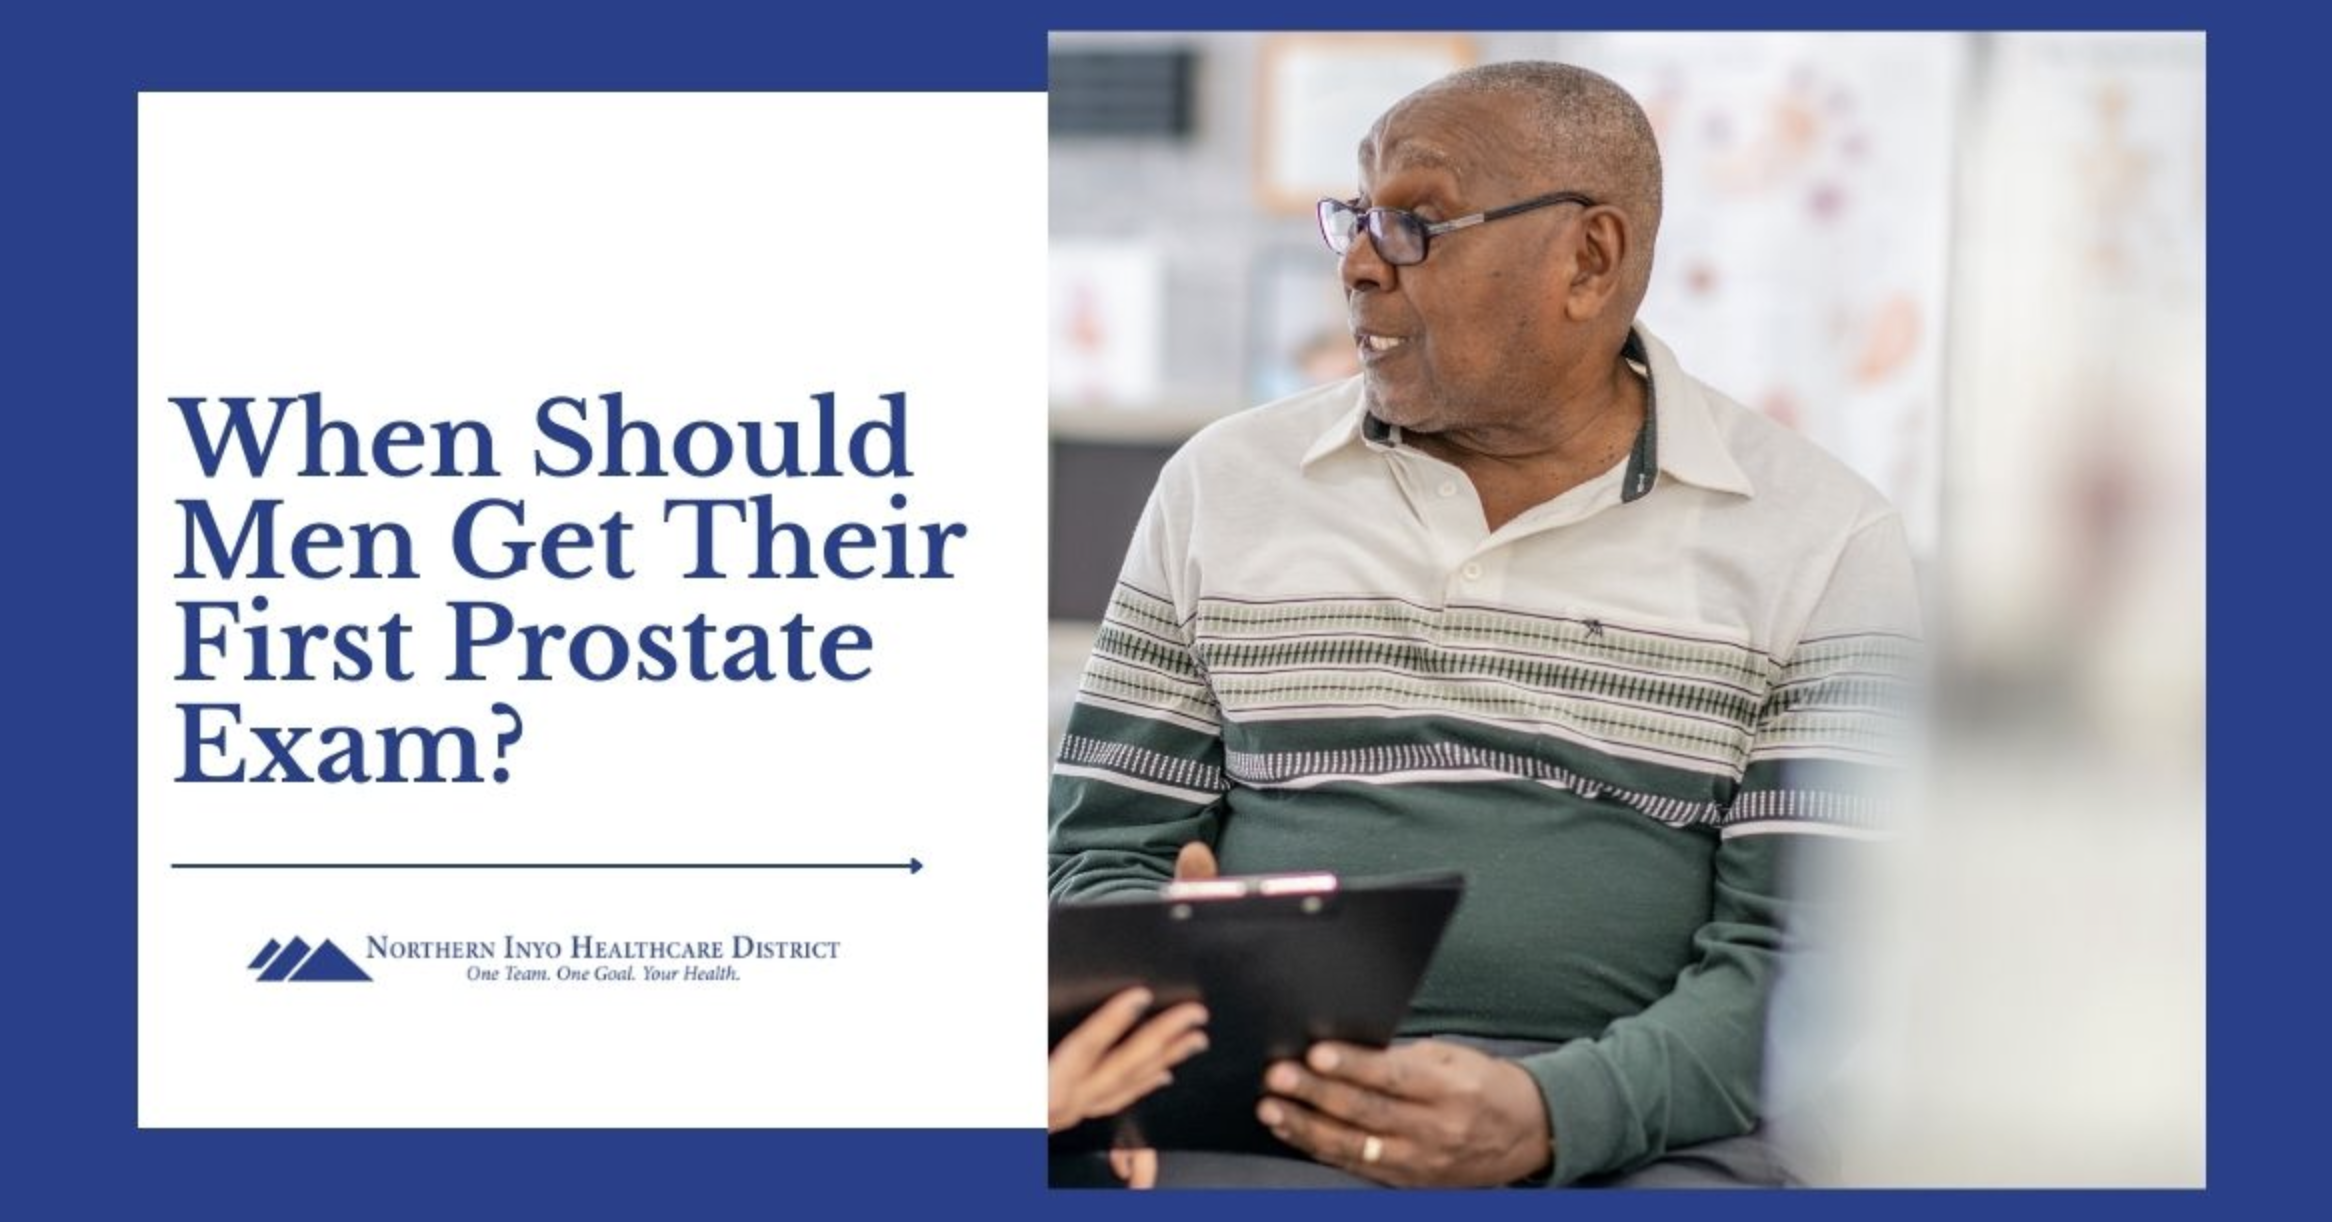 When Should Men Get Their First Prostate Exam?